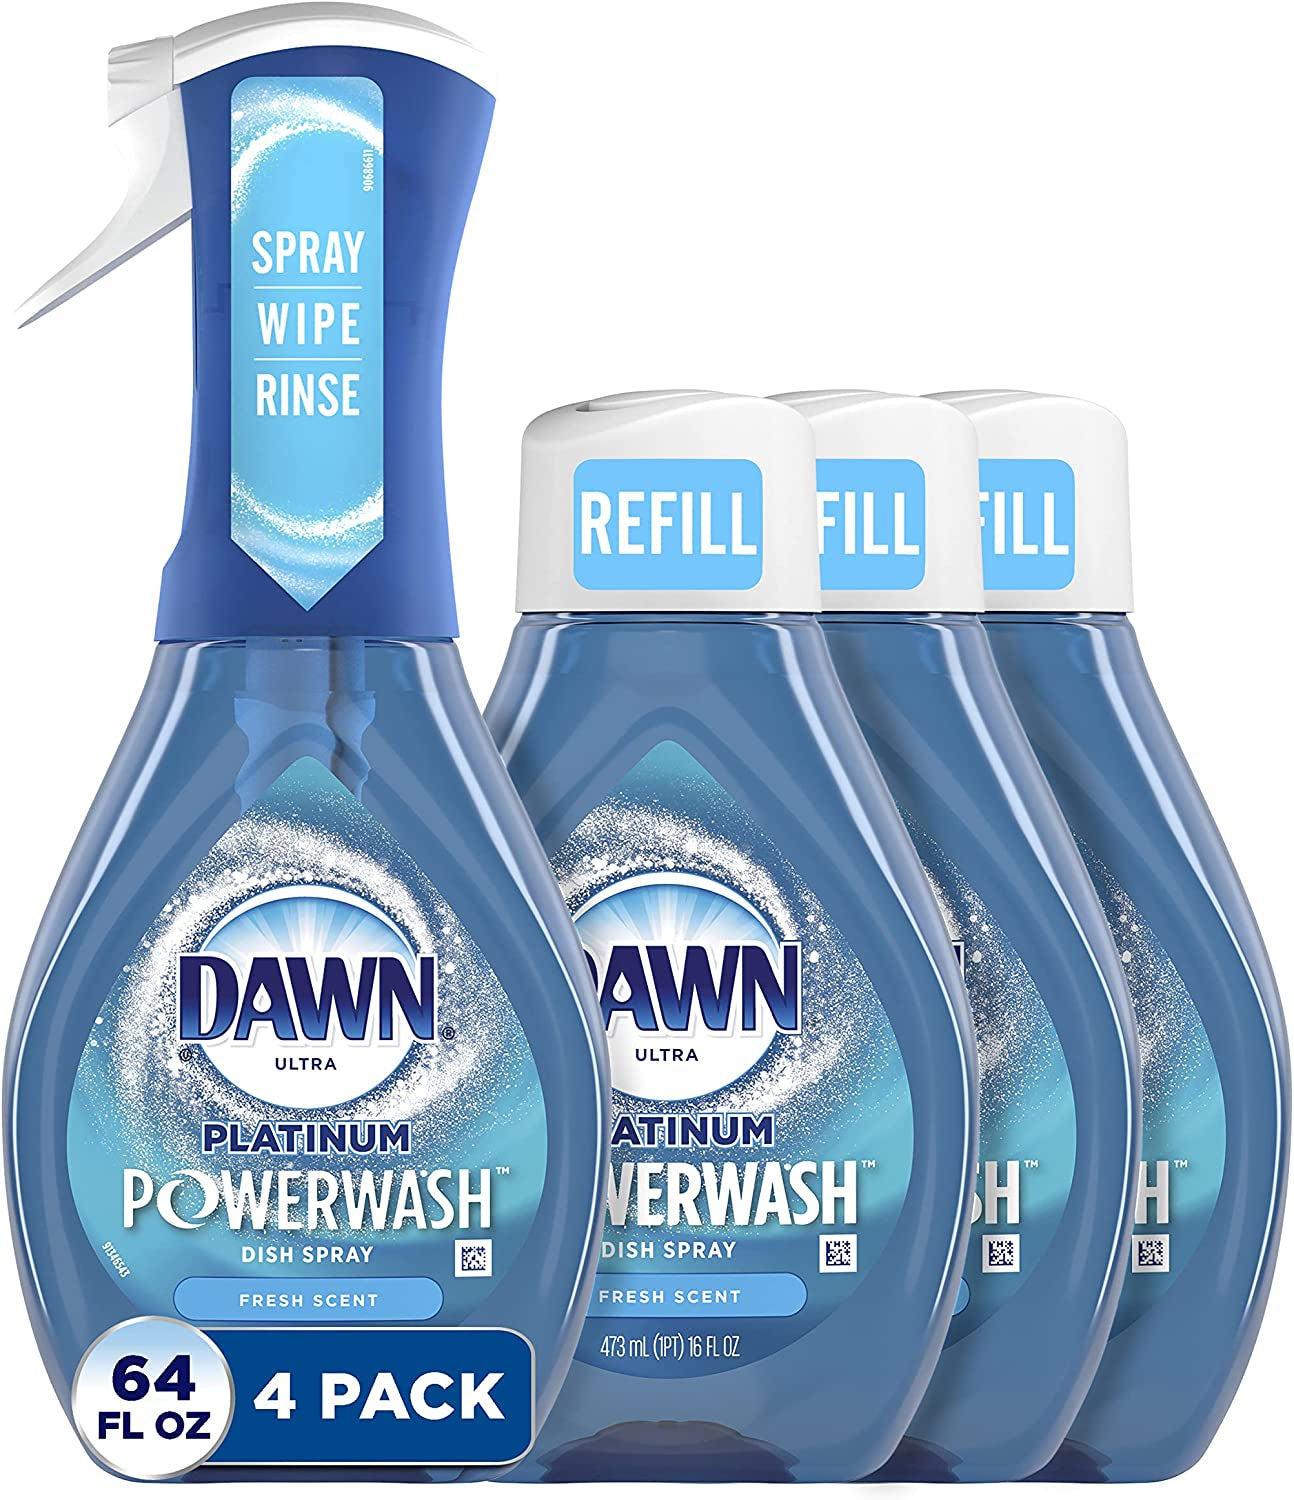 Platinum Powerwash Dish Spray, Dish Soap, Fresh Scent Bundle, 1 Spray (16Oz) + 3 Refills (16Oz Each)(Pack of 4)